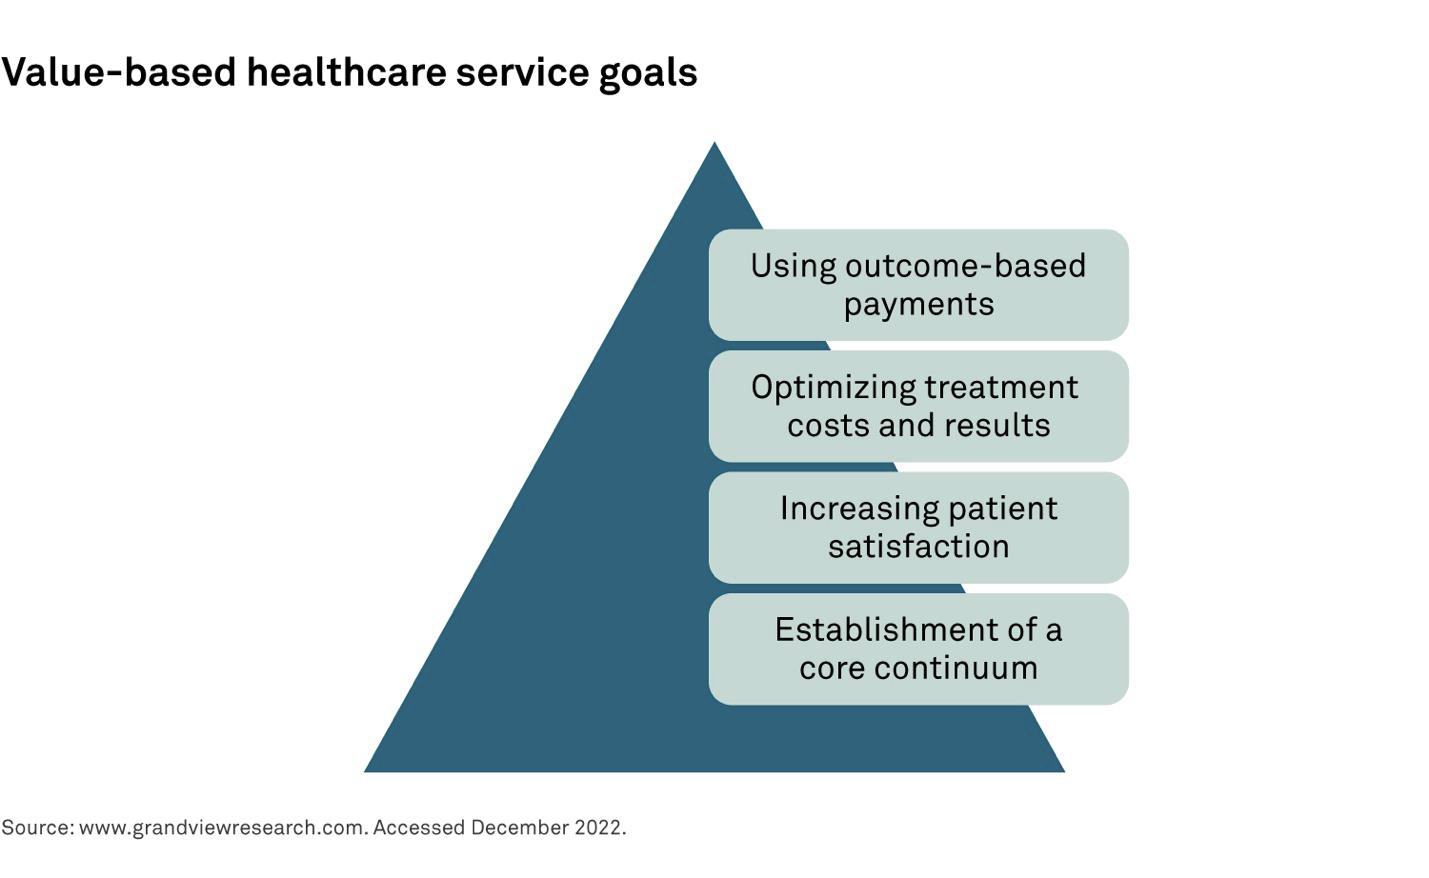 Value-based healthcare service goals diagram